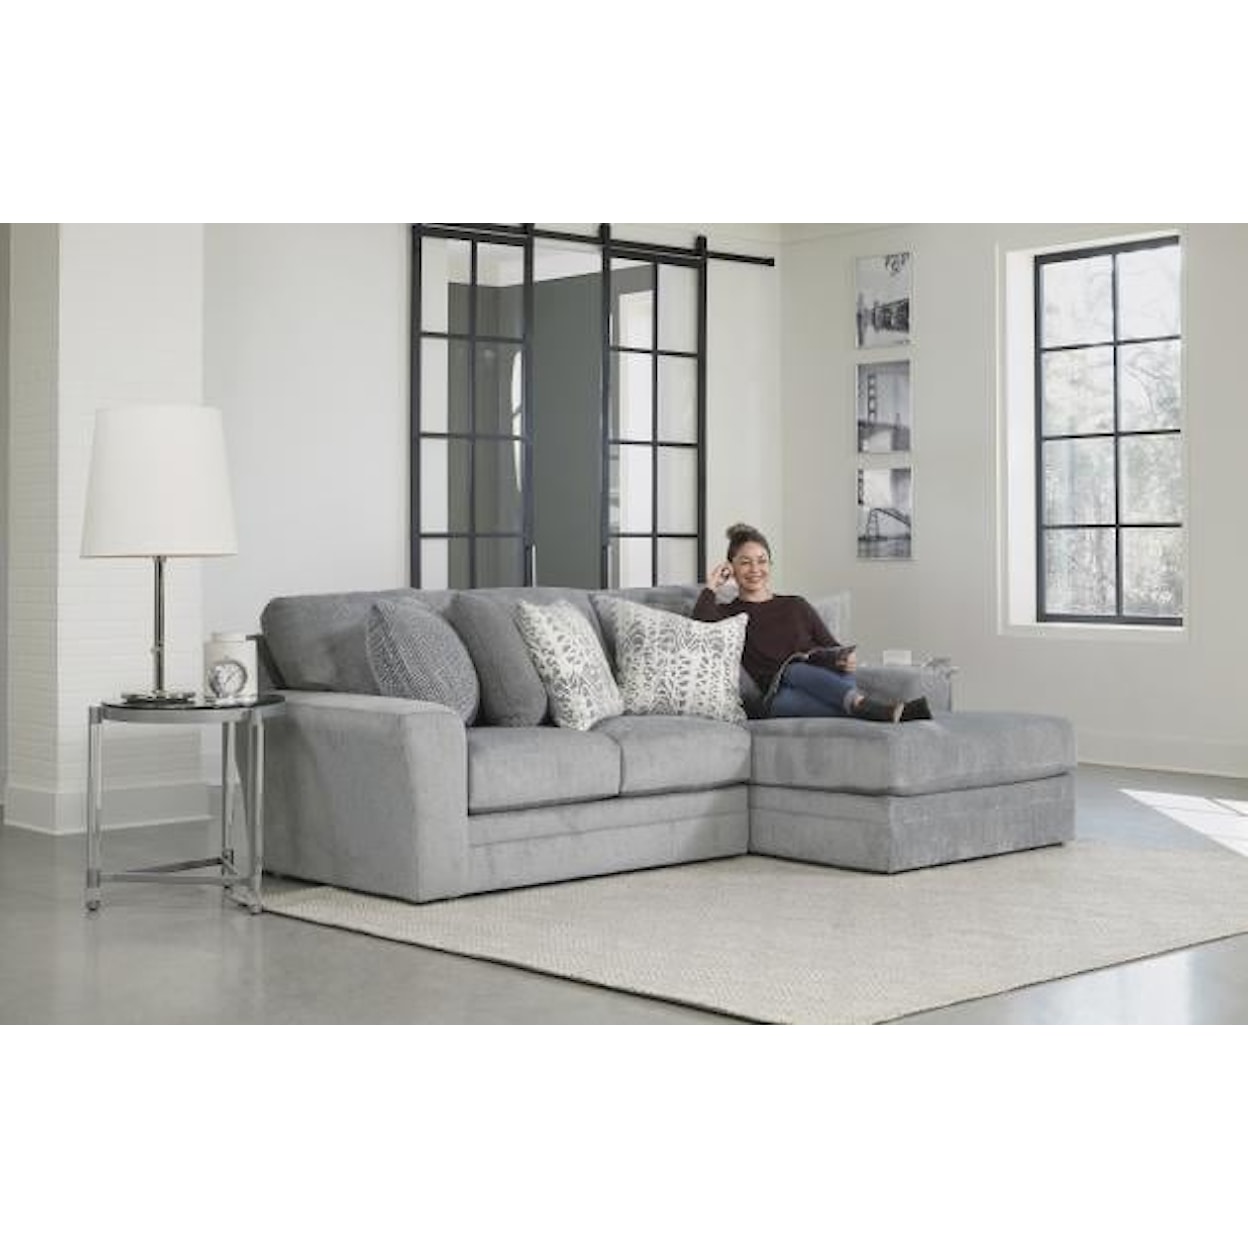 Jackson Furniture 2477 GLACIER 2477 Sofa/Chaise 2pc